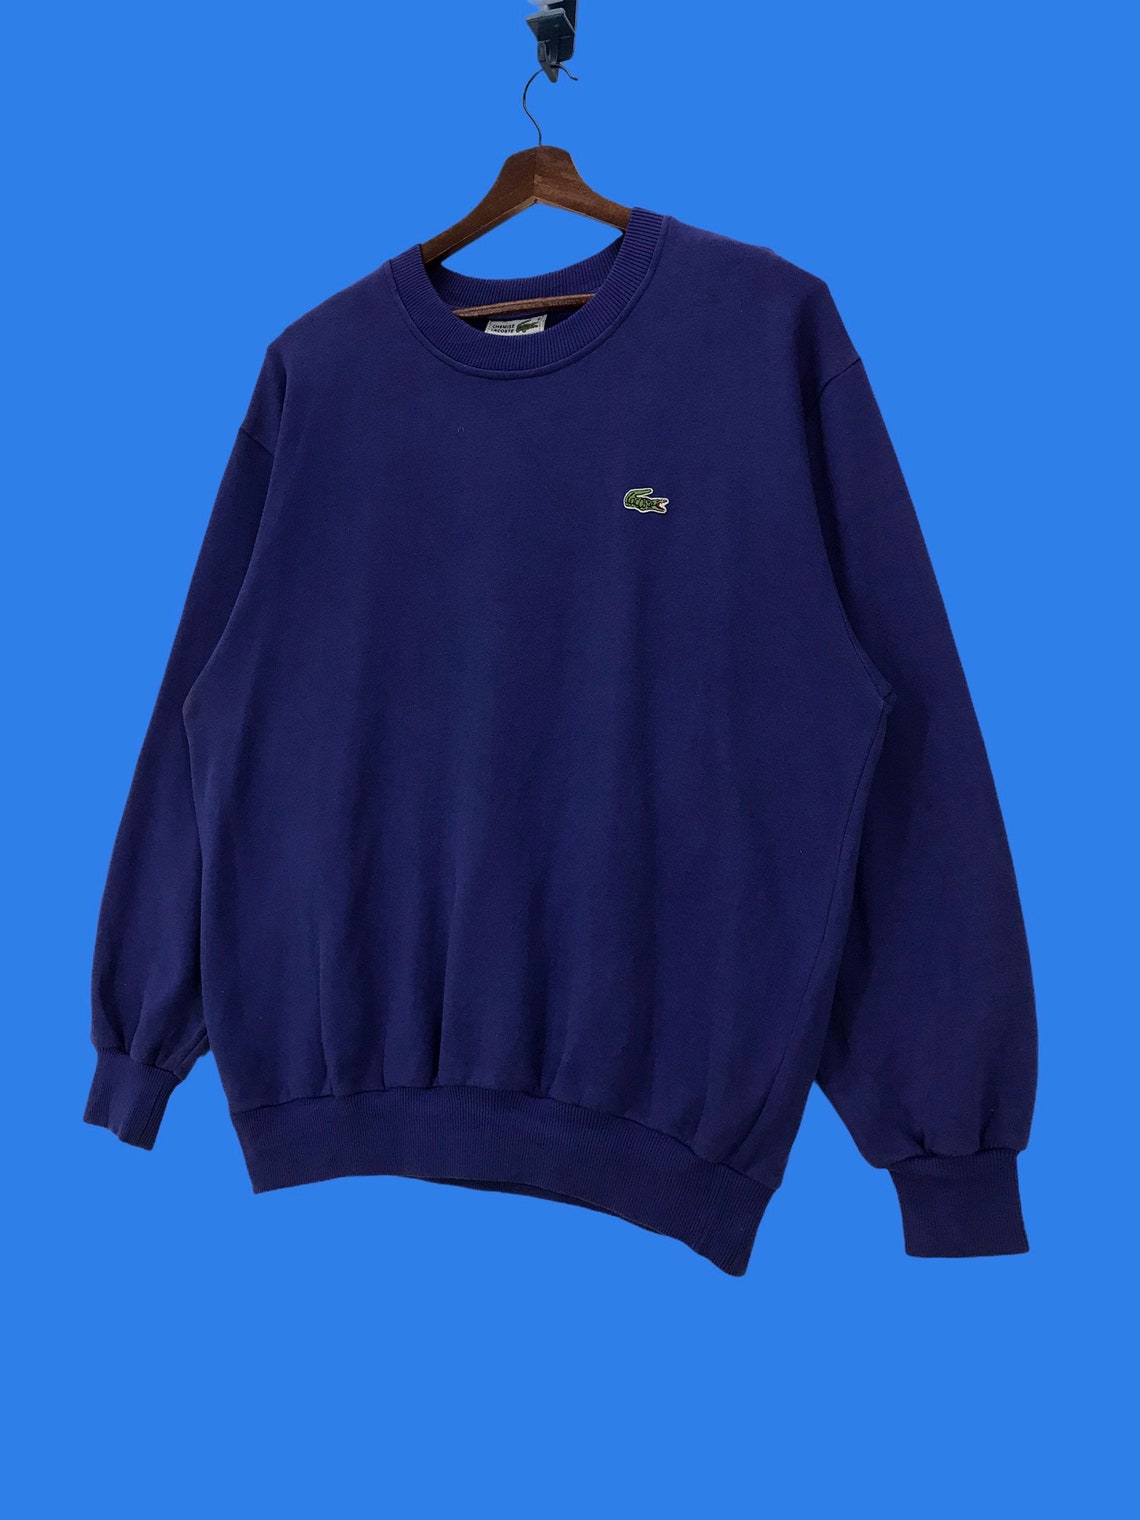 Vintage Chemise Lacoste Crewneck Sweatshirt Small Logo Lacoste Pullover ...